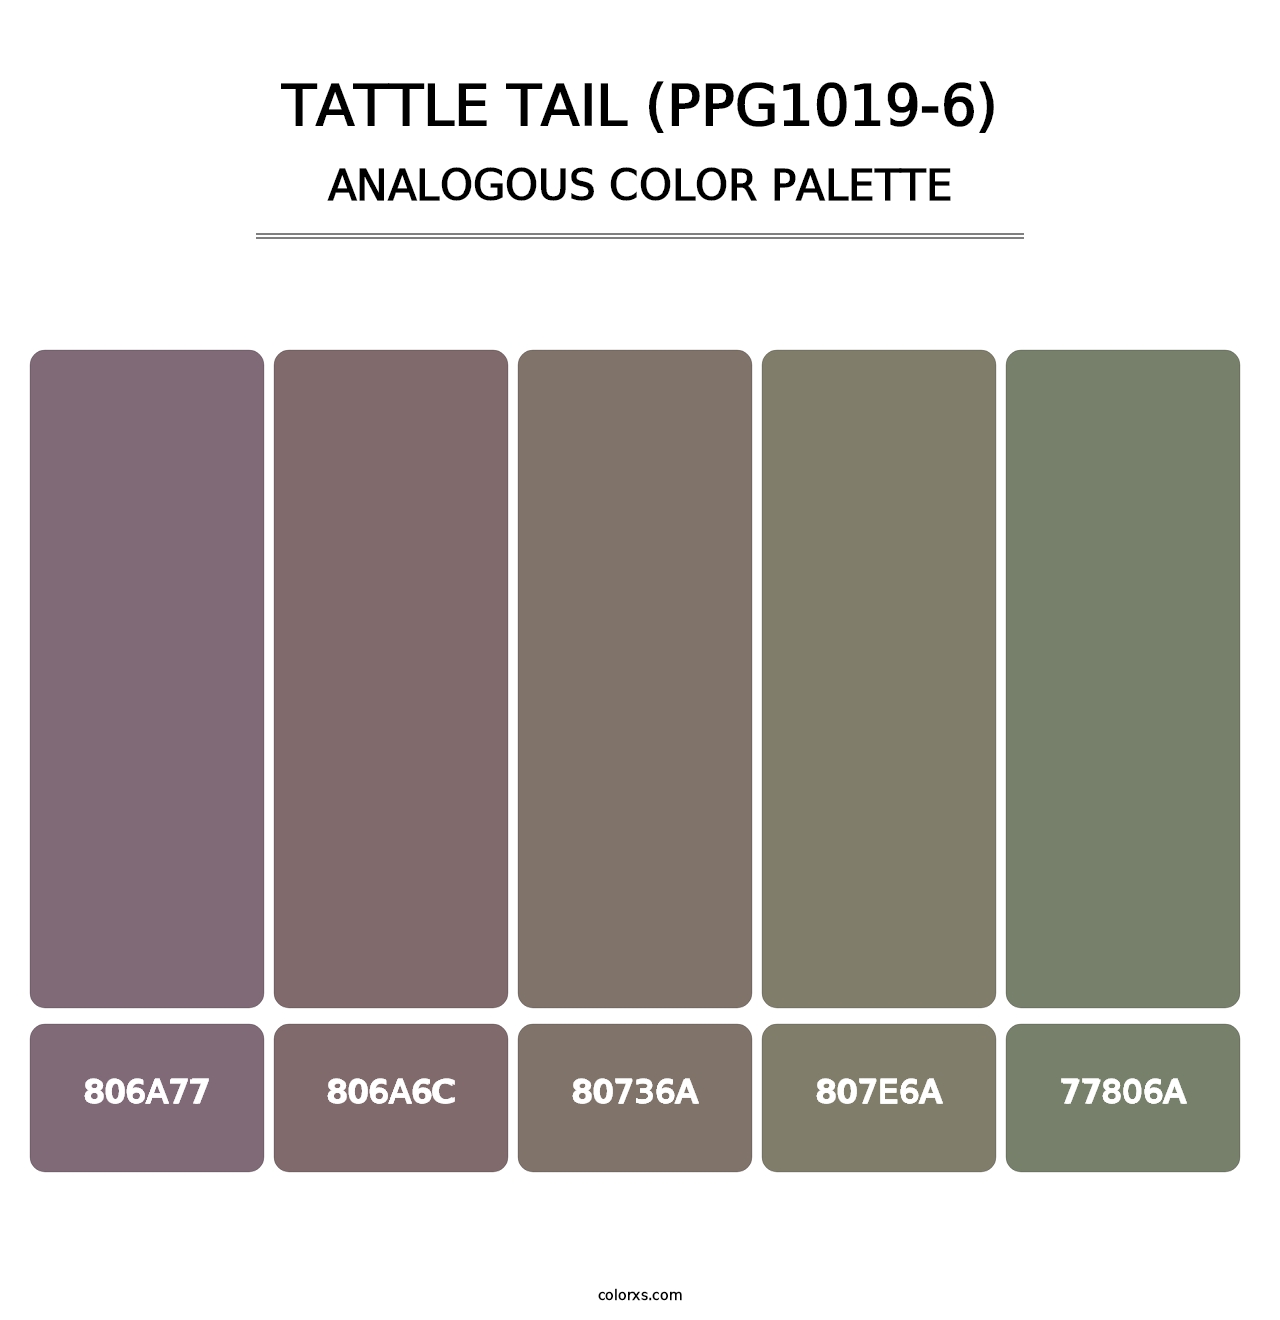 Tattle Tail (PPG1019-6) - Analogous Color Palette